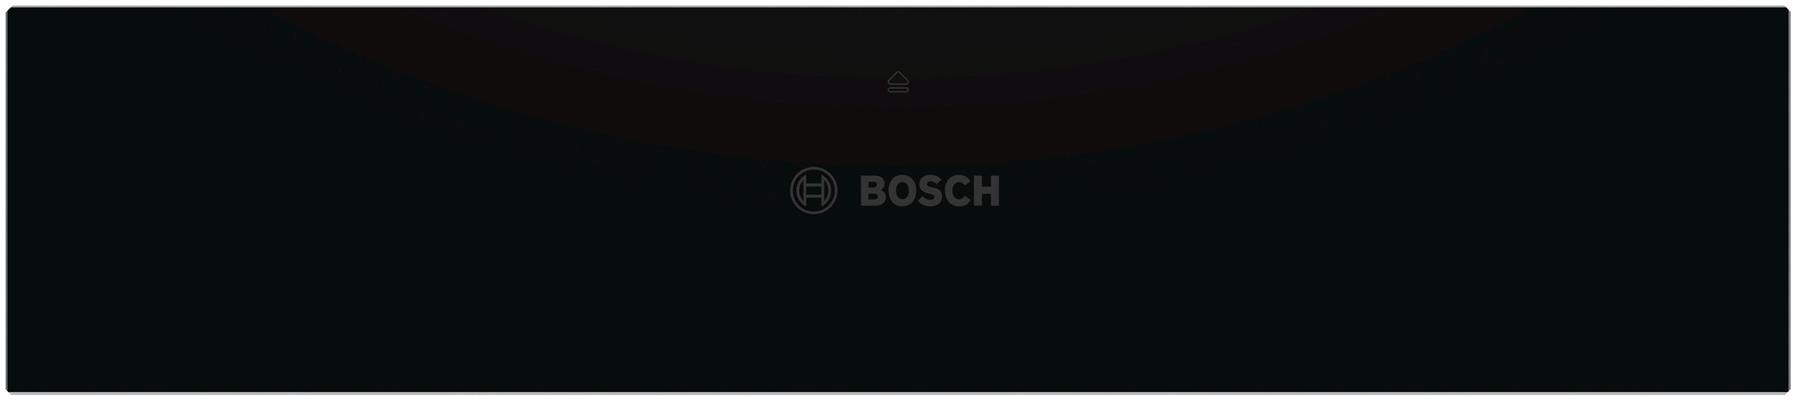 BVE810NC0-Bosch-Vacu%C3%BCmsystemen